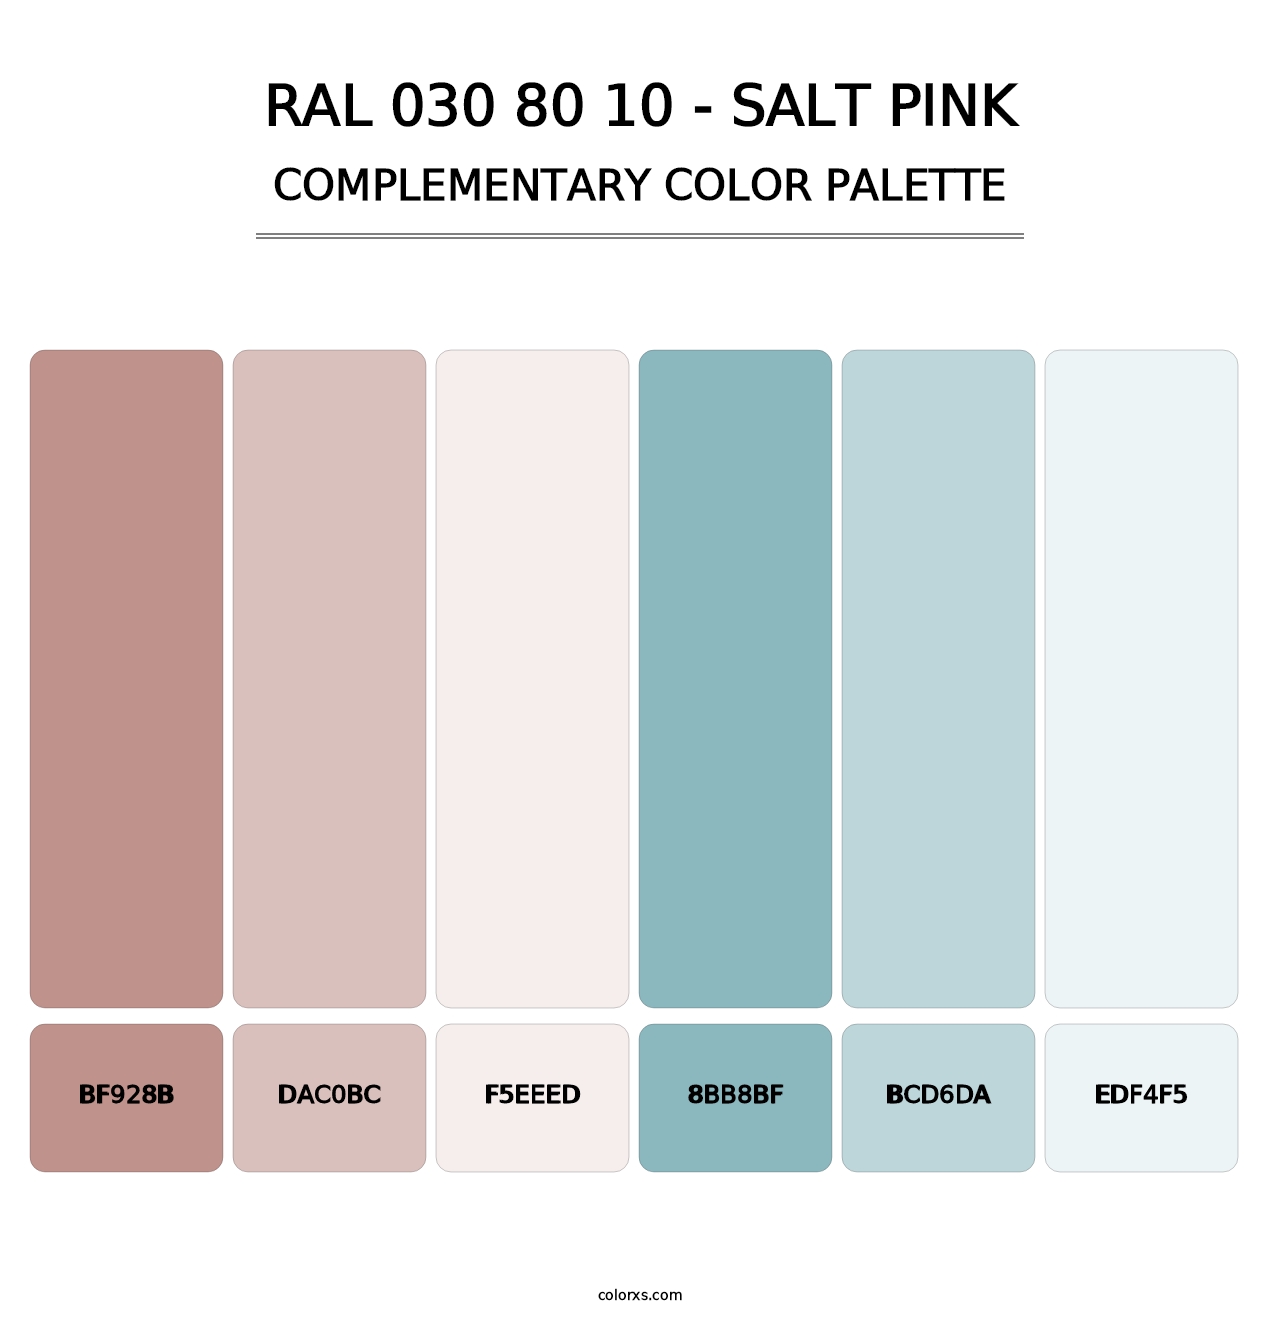 RAL 030 80 10 - Salt Pink - Complementary Color Palette